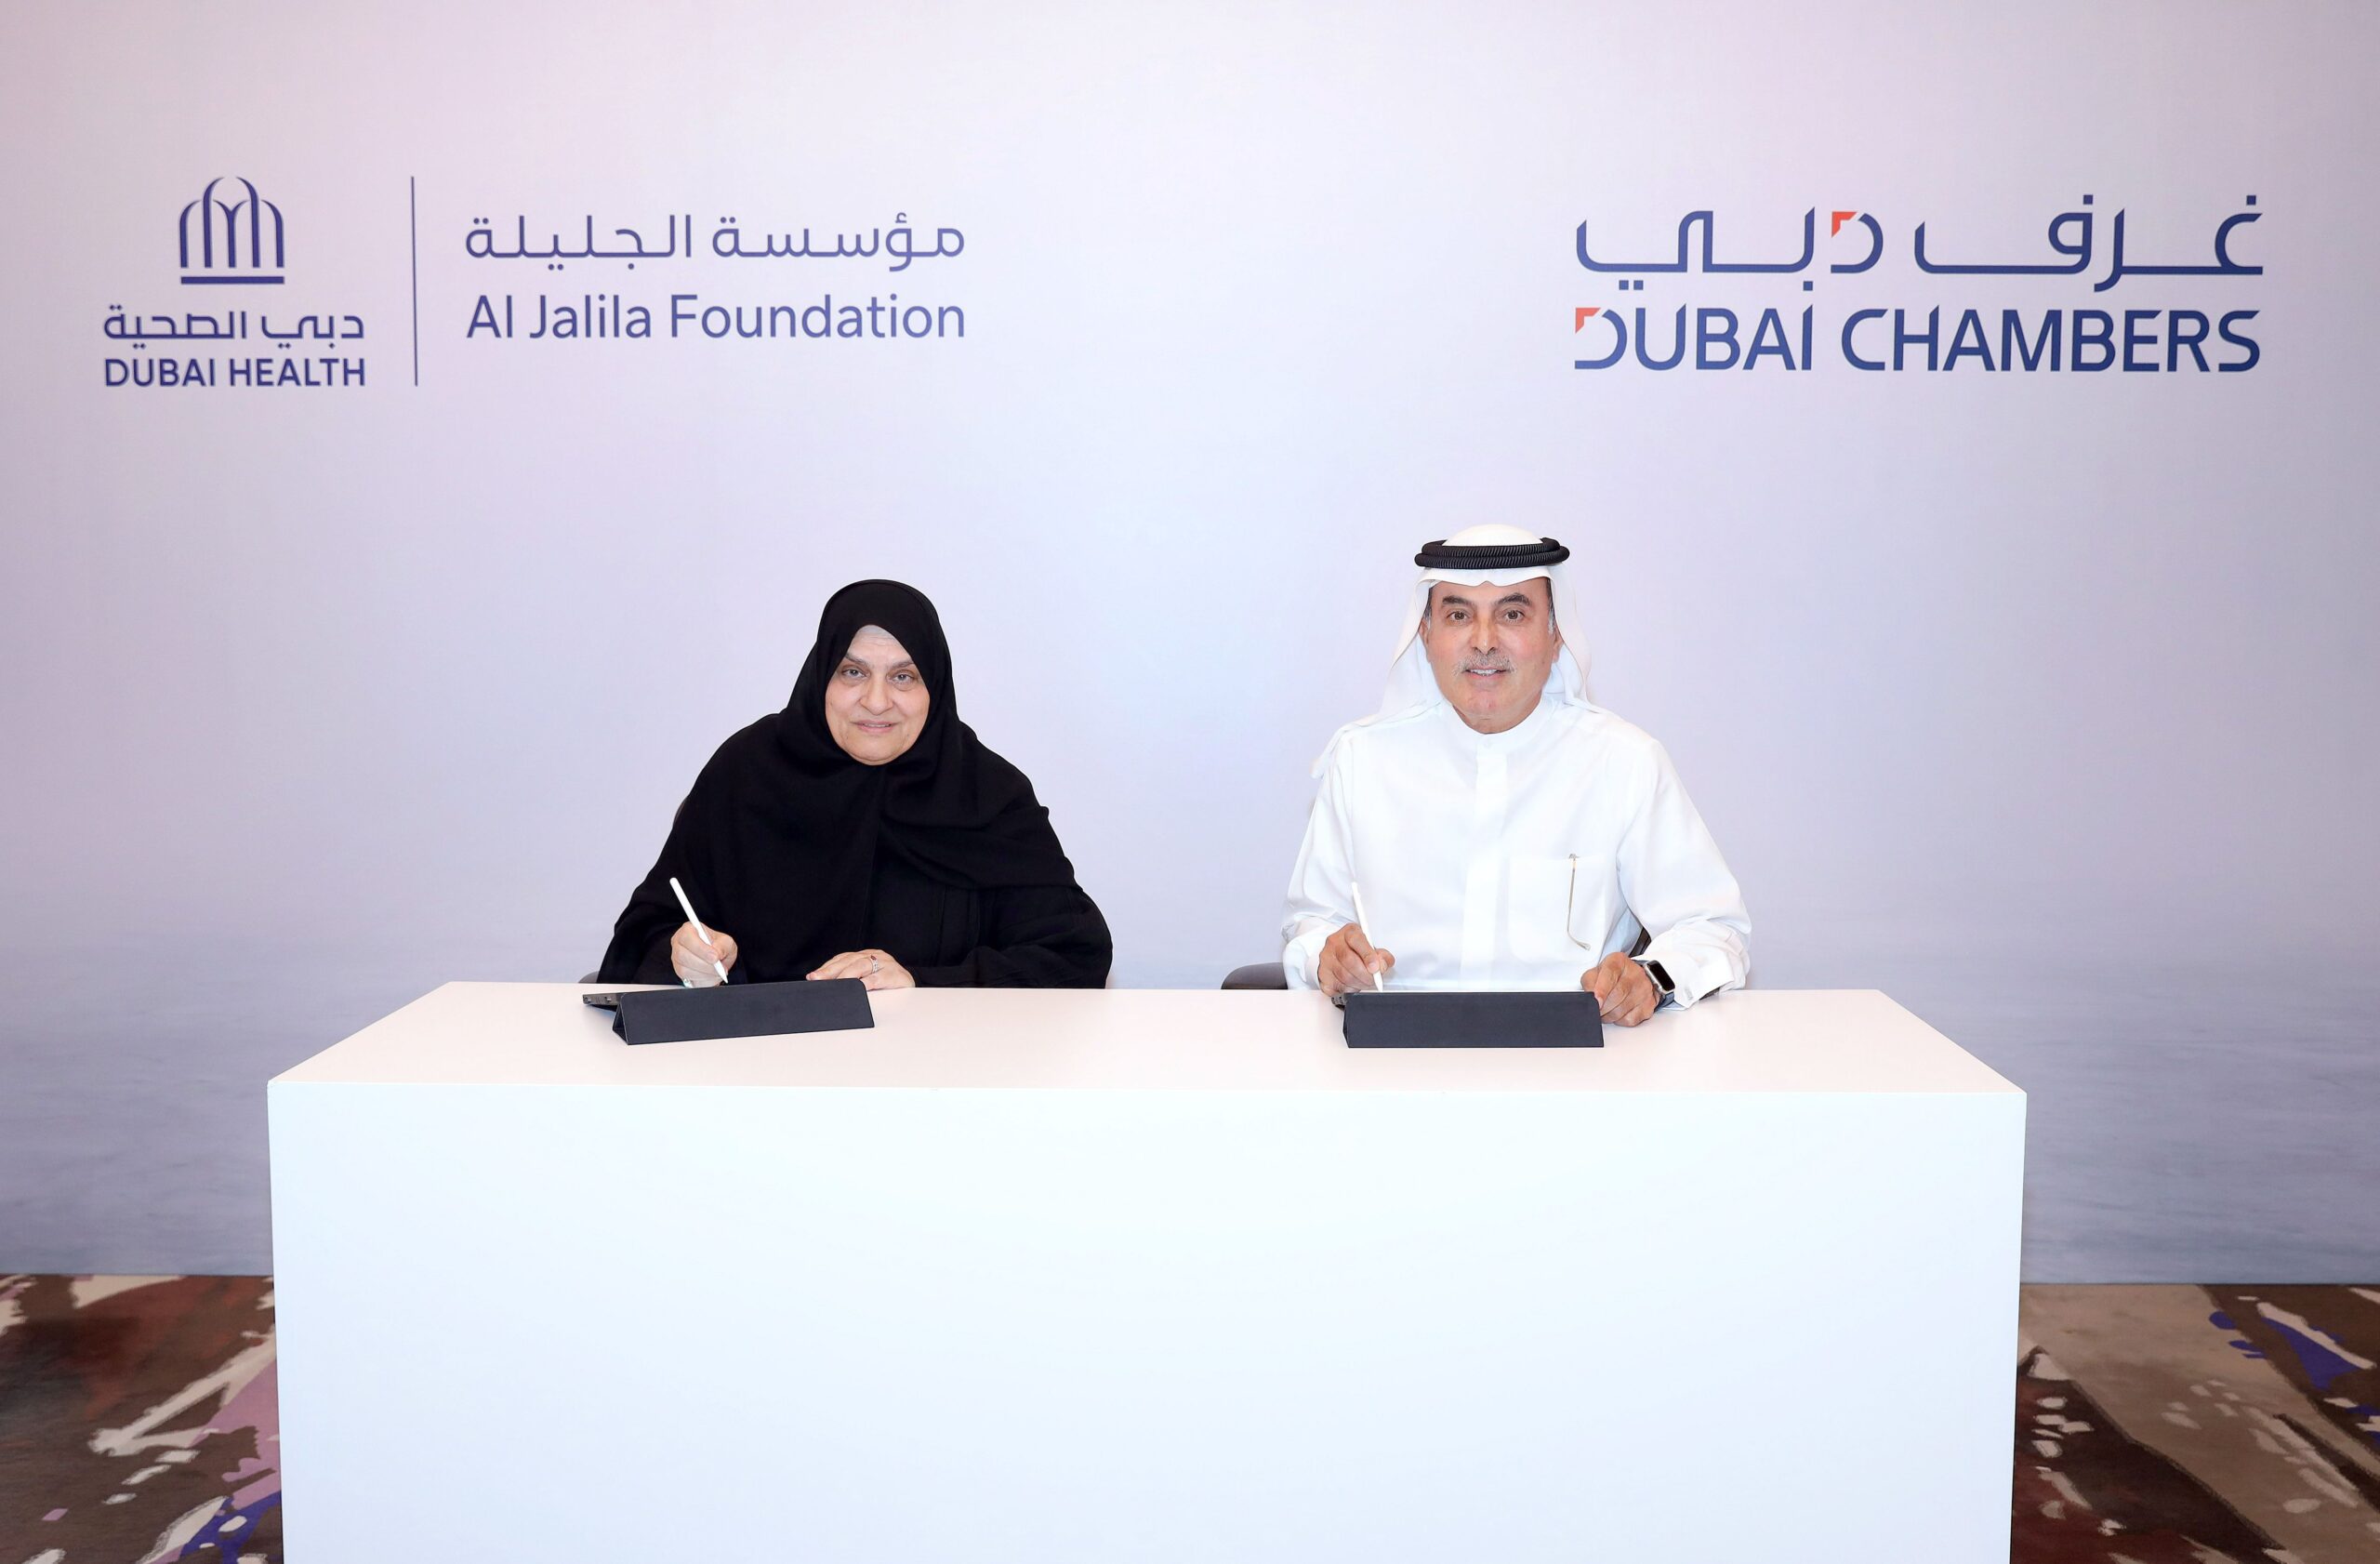 غُرف دبي تتبرع بـ 15 مليون درهم لصالح مستشفى حمدان بن راشد للسرطان